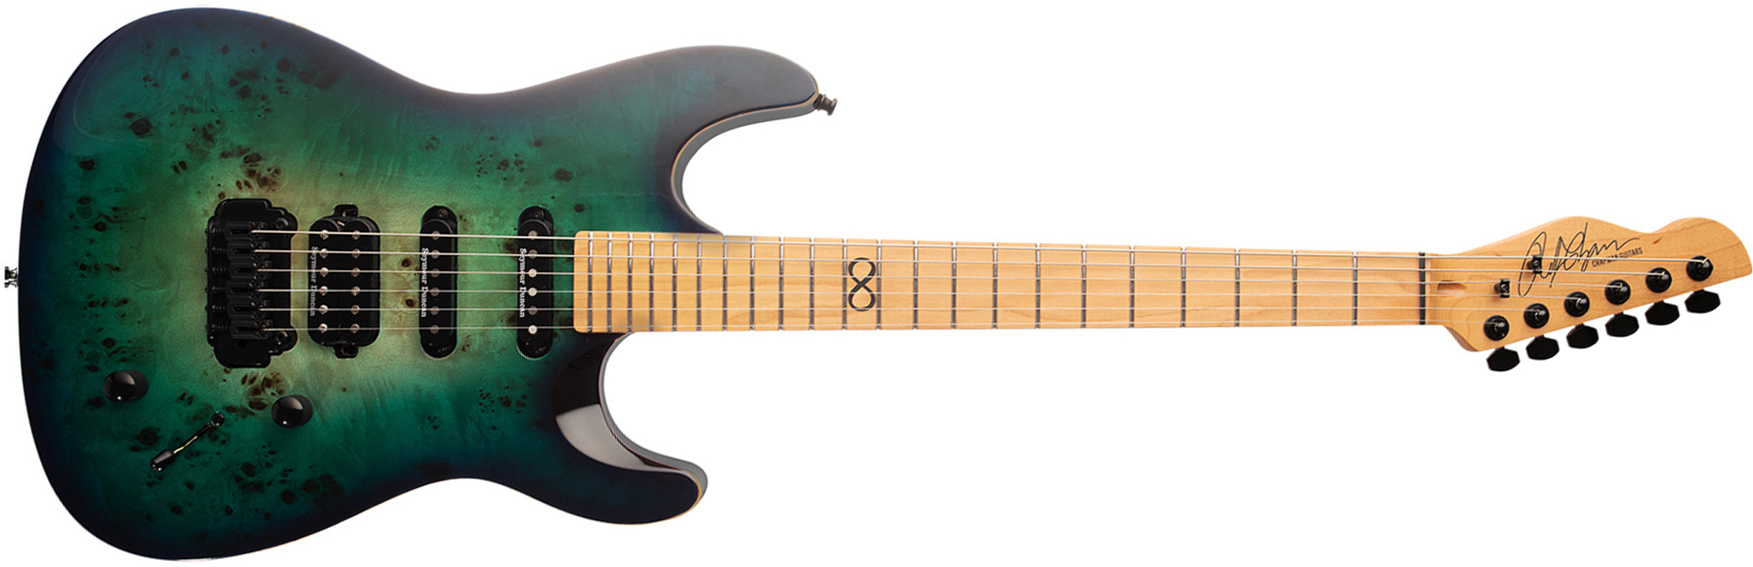 Chapman Guitars Ml1 Hybrid Pro Hss Seymour Duncan Trem Mn - Turquoise Rain - Str shape electric guitar - Main picture